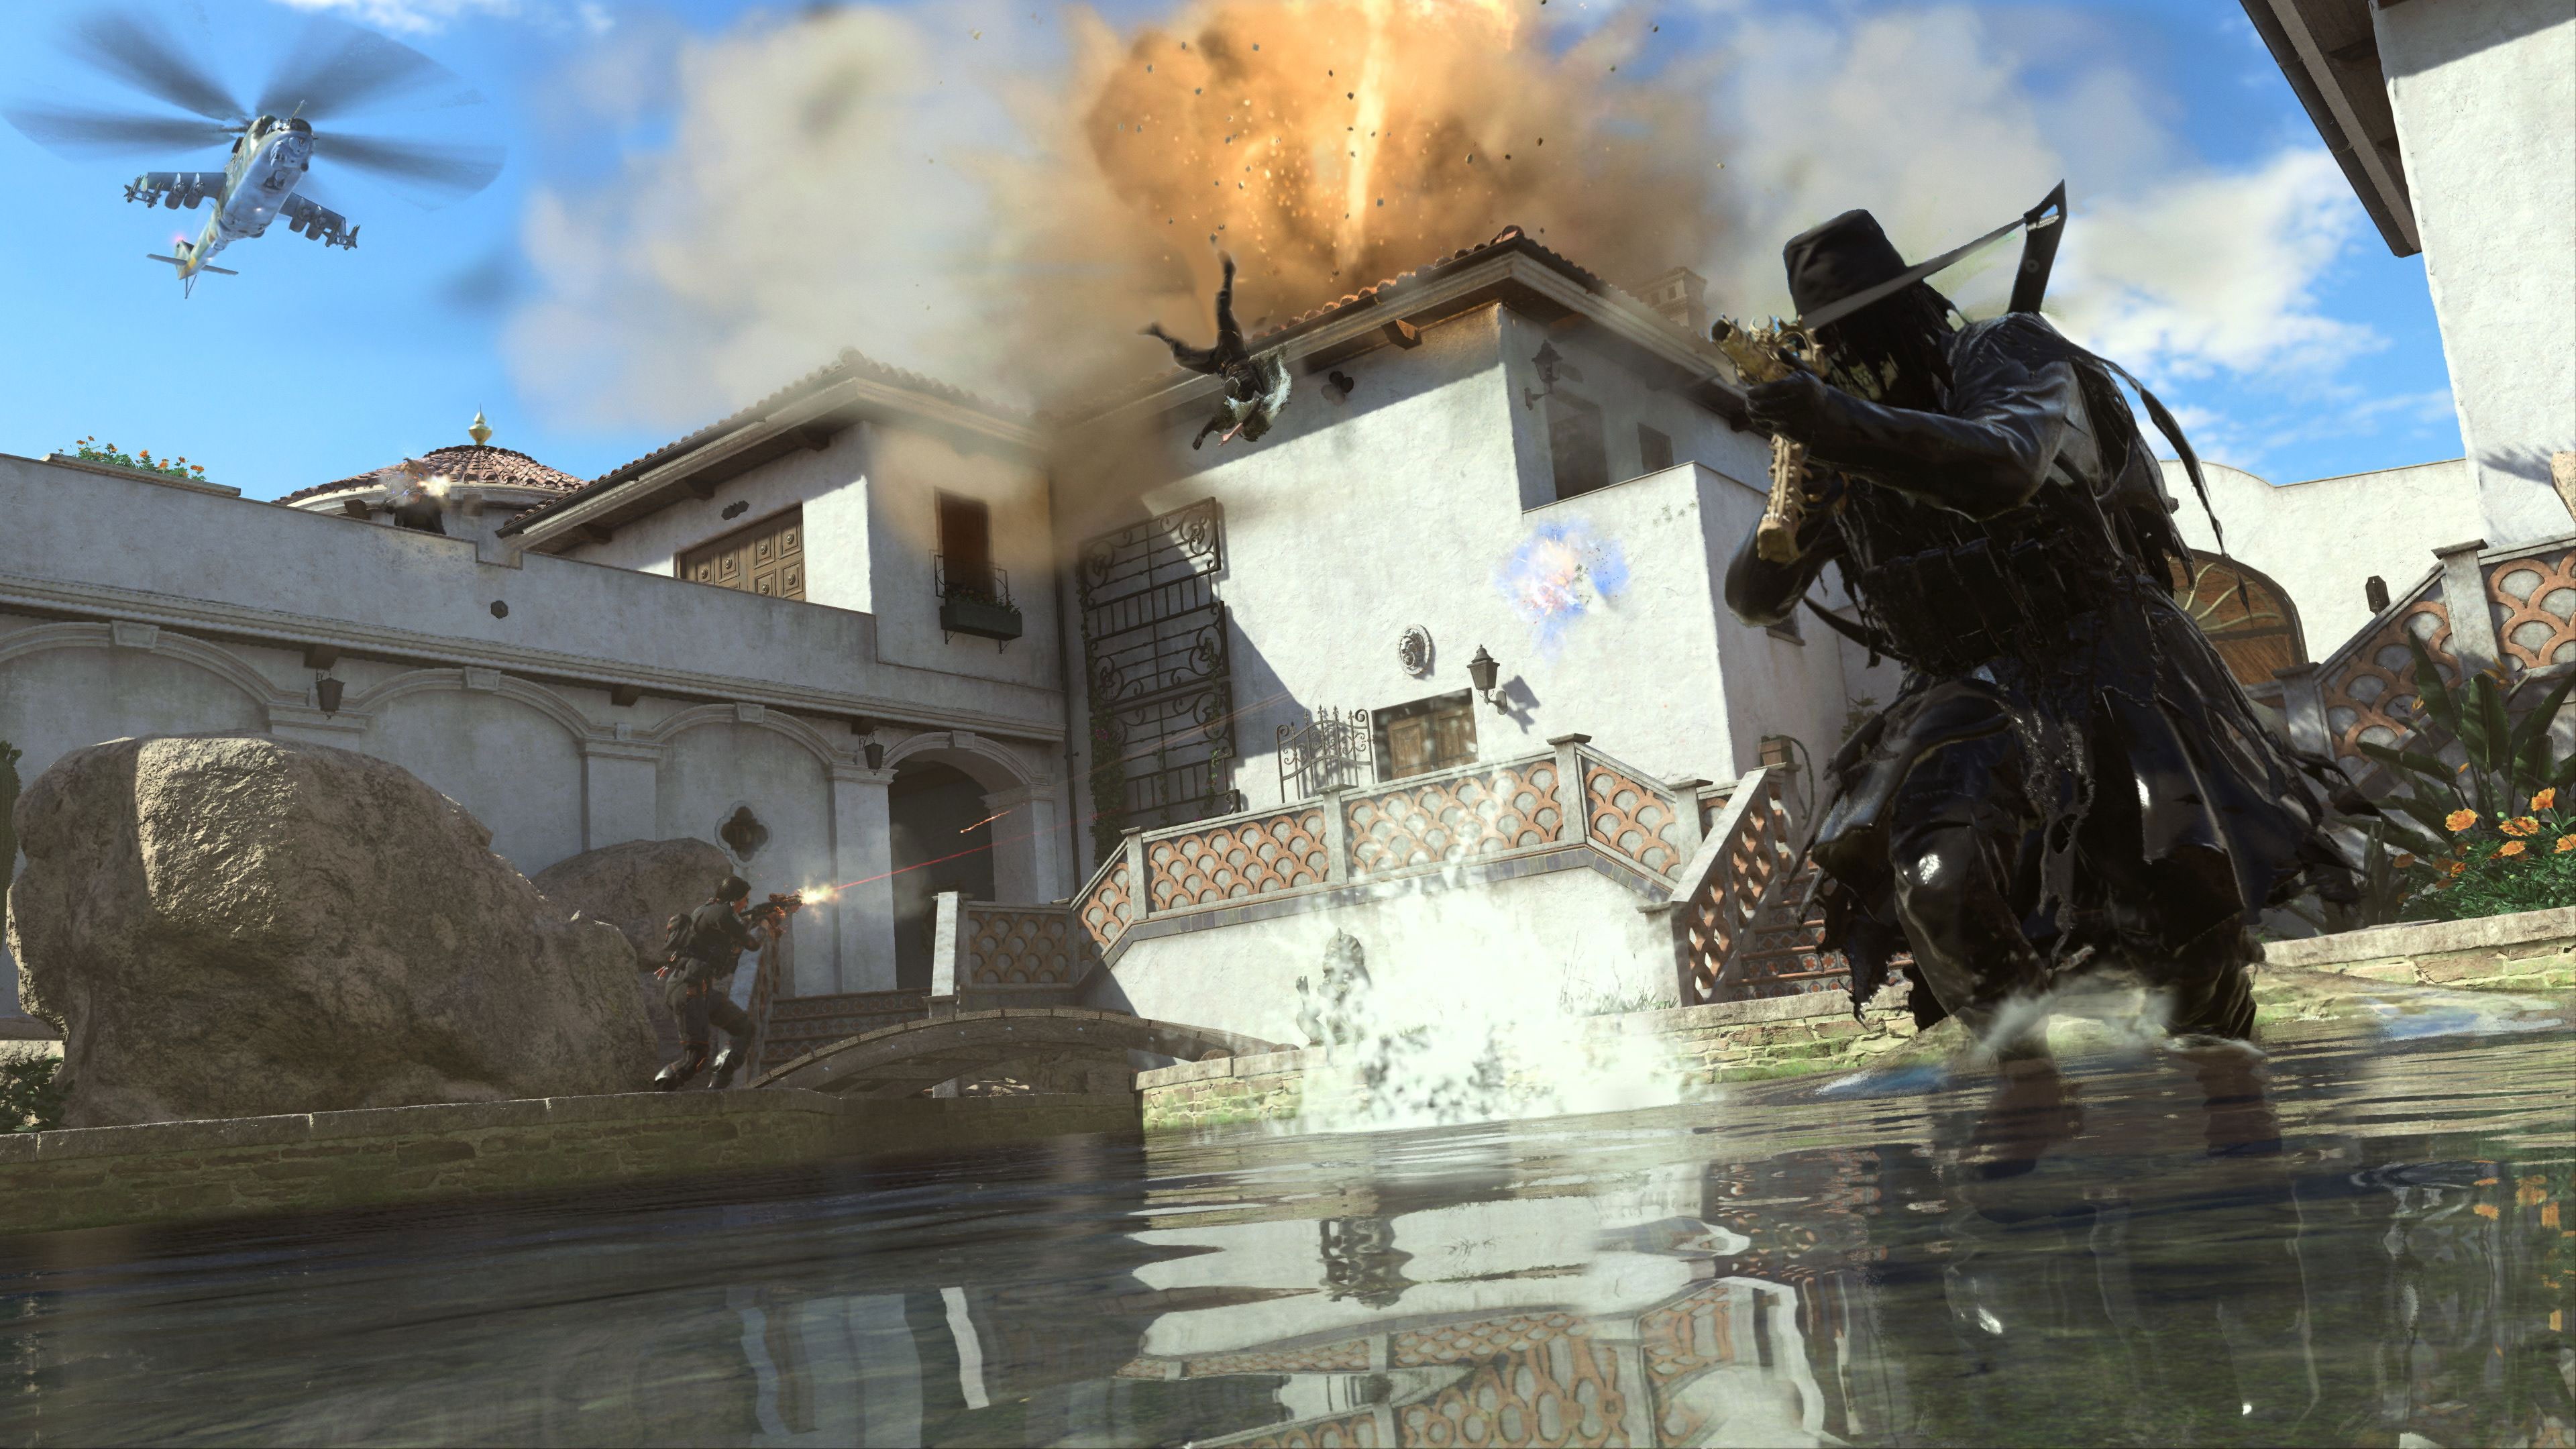 Call Of Duty: Modern Warfare II — Cross-Gen Bundle on PS5 PS4 — price  history, screenshots, discounts • USA